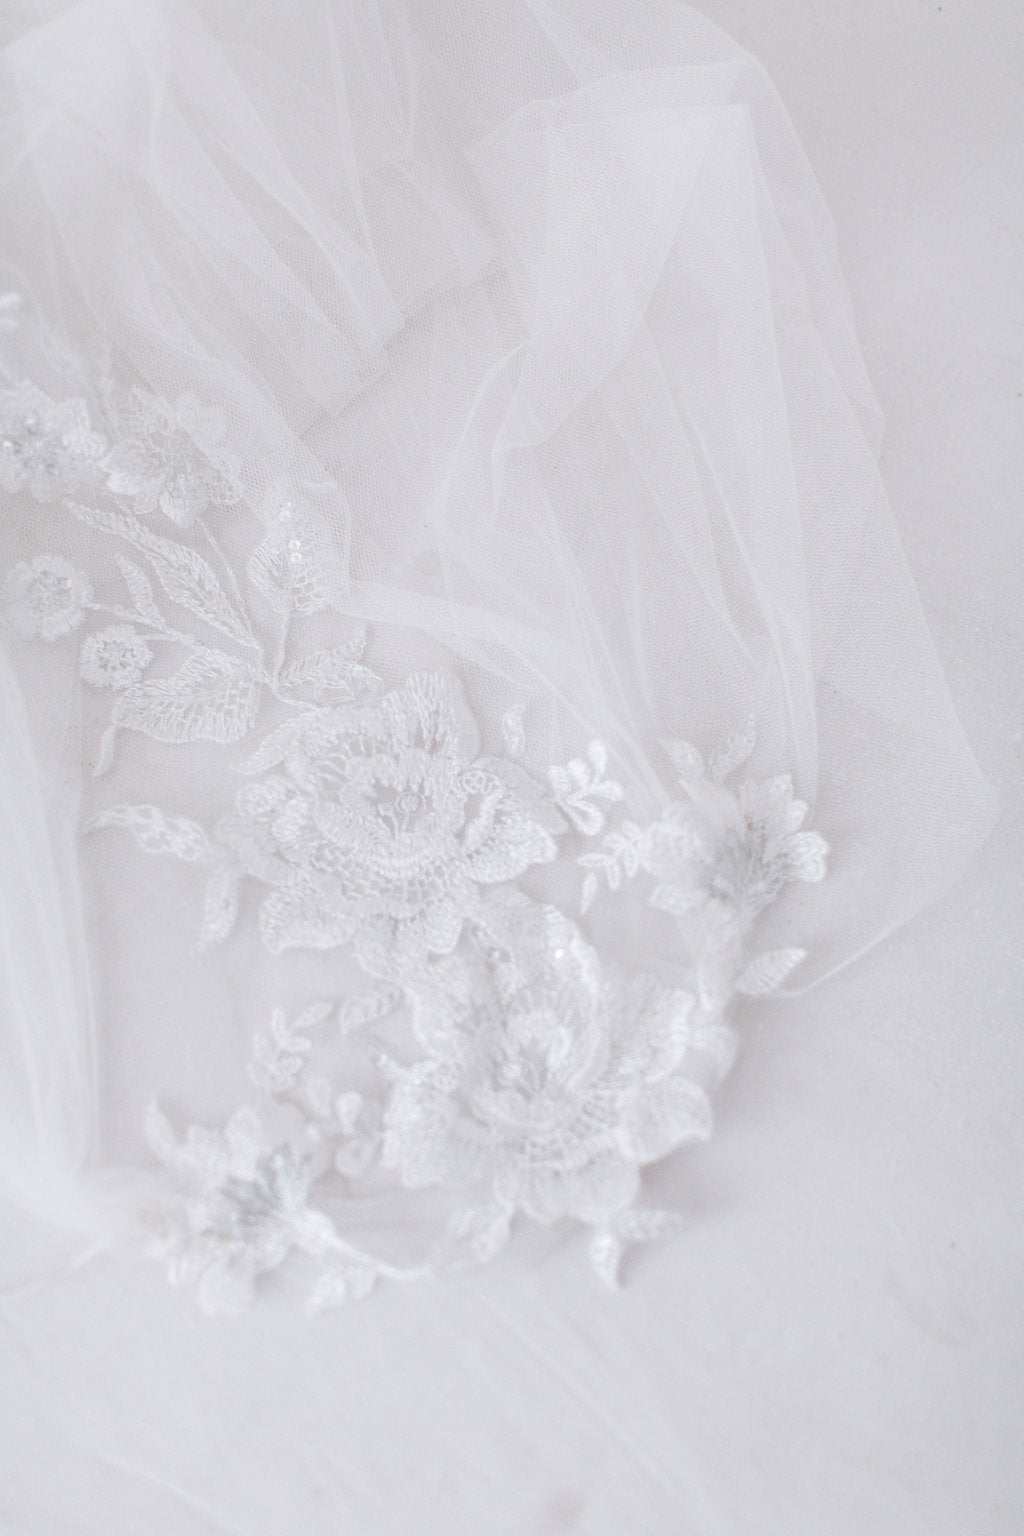 XS S M L XL PERSONALISED Ivory Lace Wedding Garter bride bridal White Satin  gift